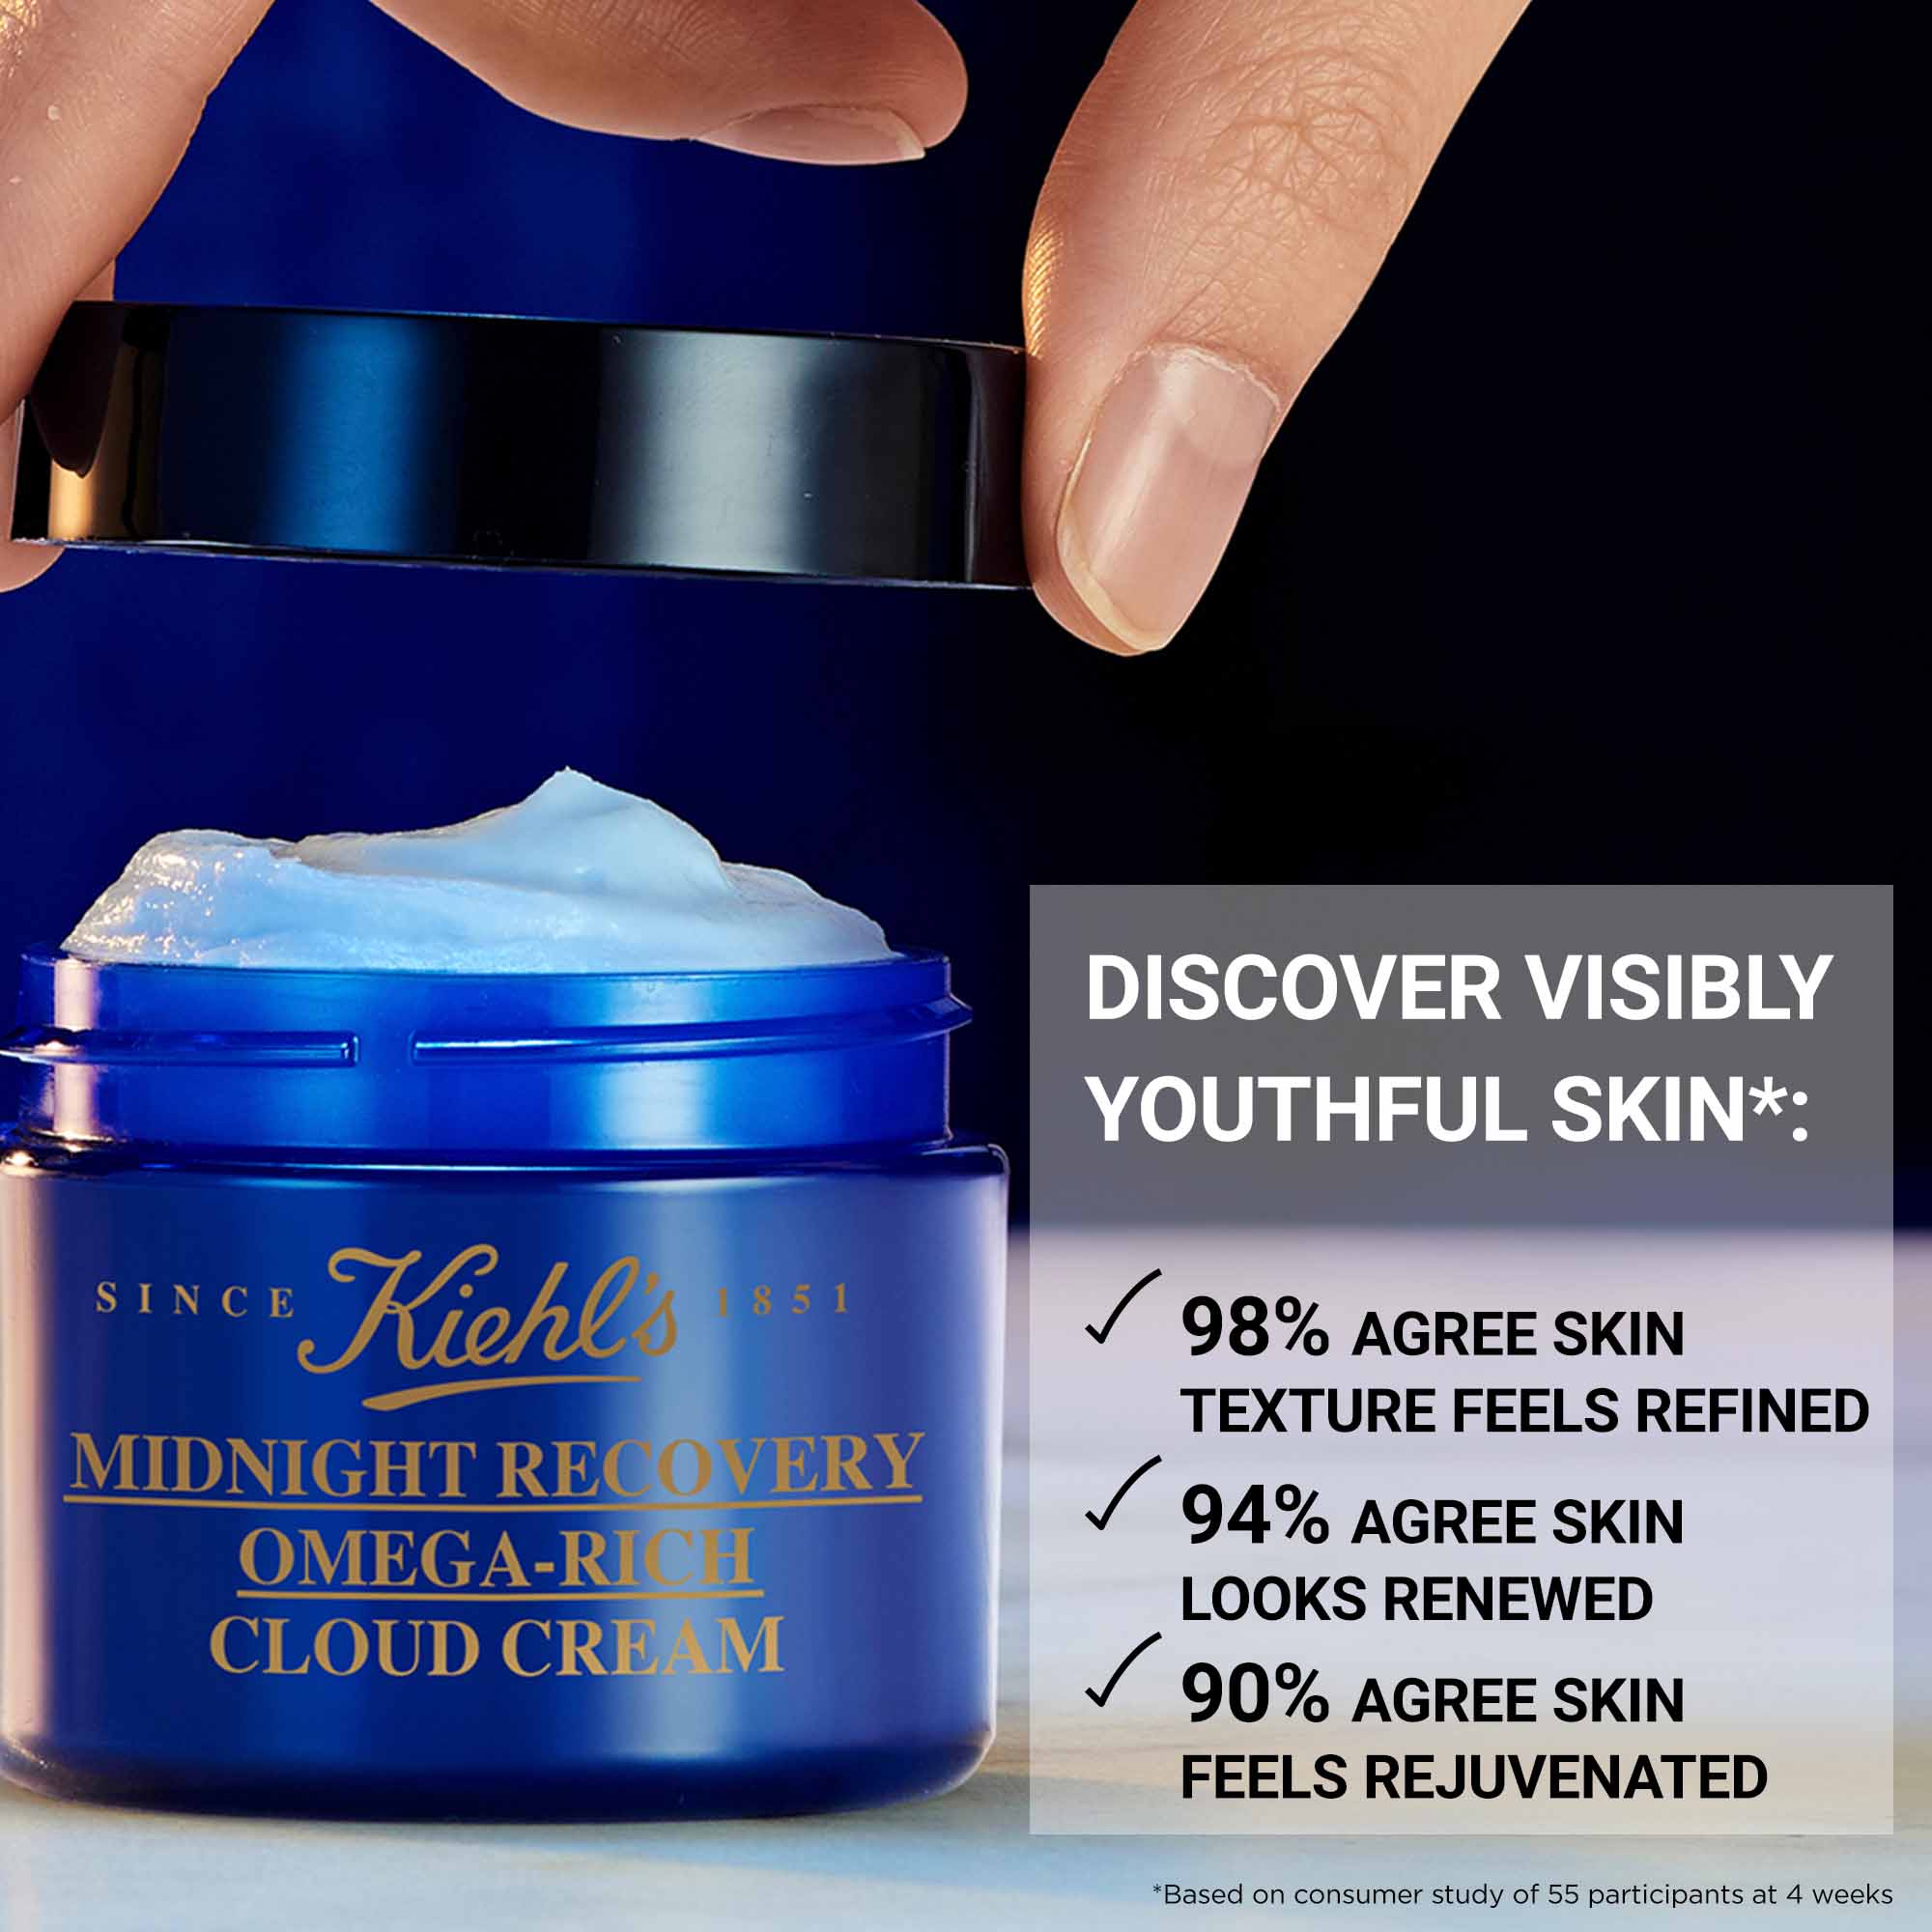 Kiehl's Midnight Recovery Omega Rich Cloud Cream - 1.7oz / 1.7OZ